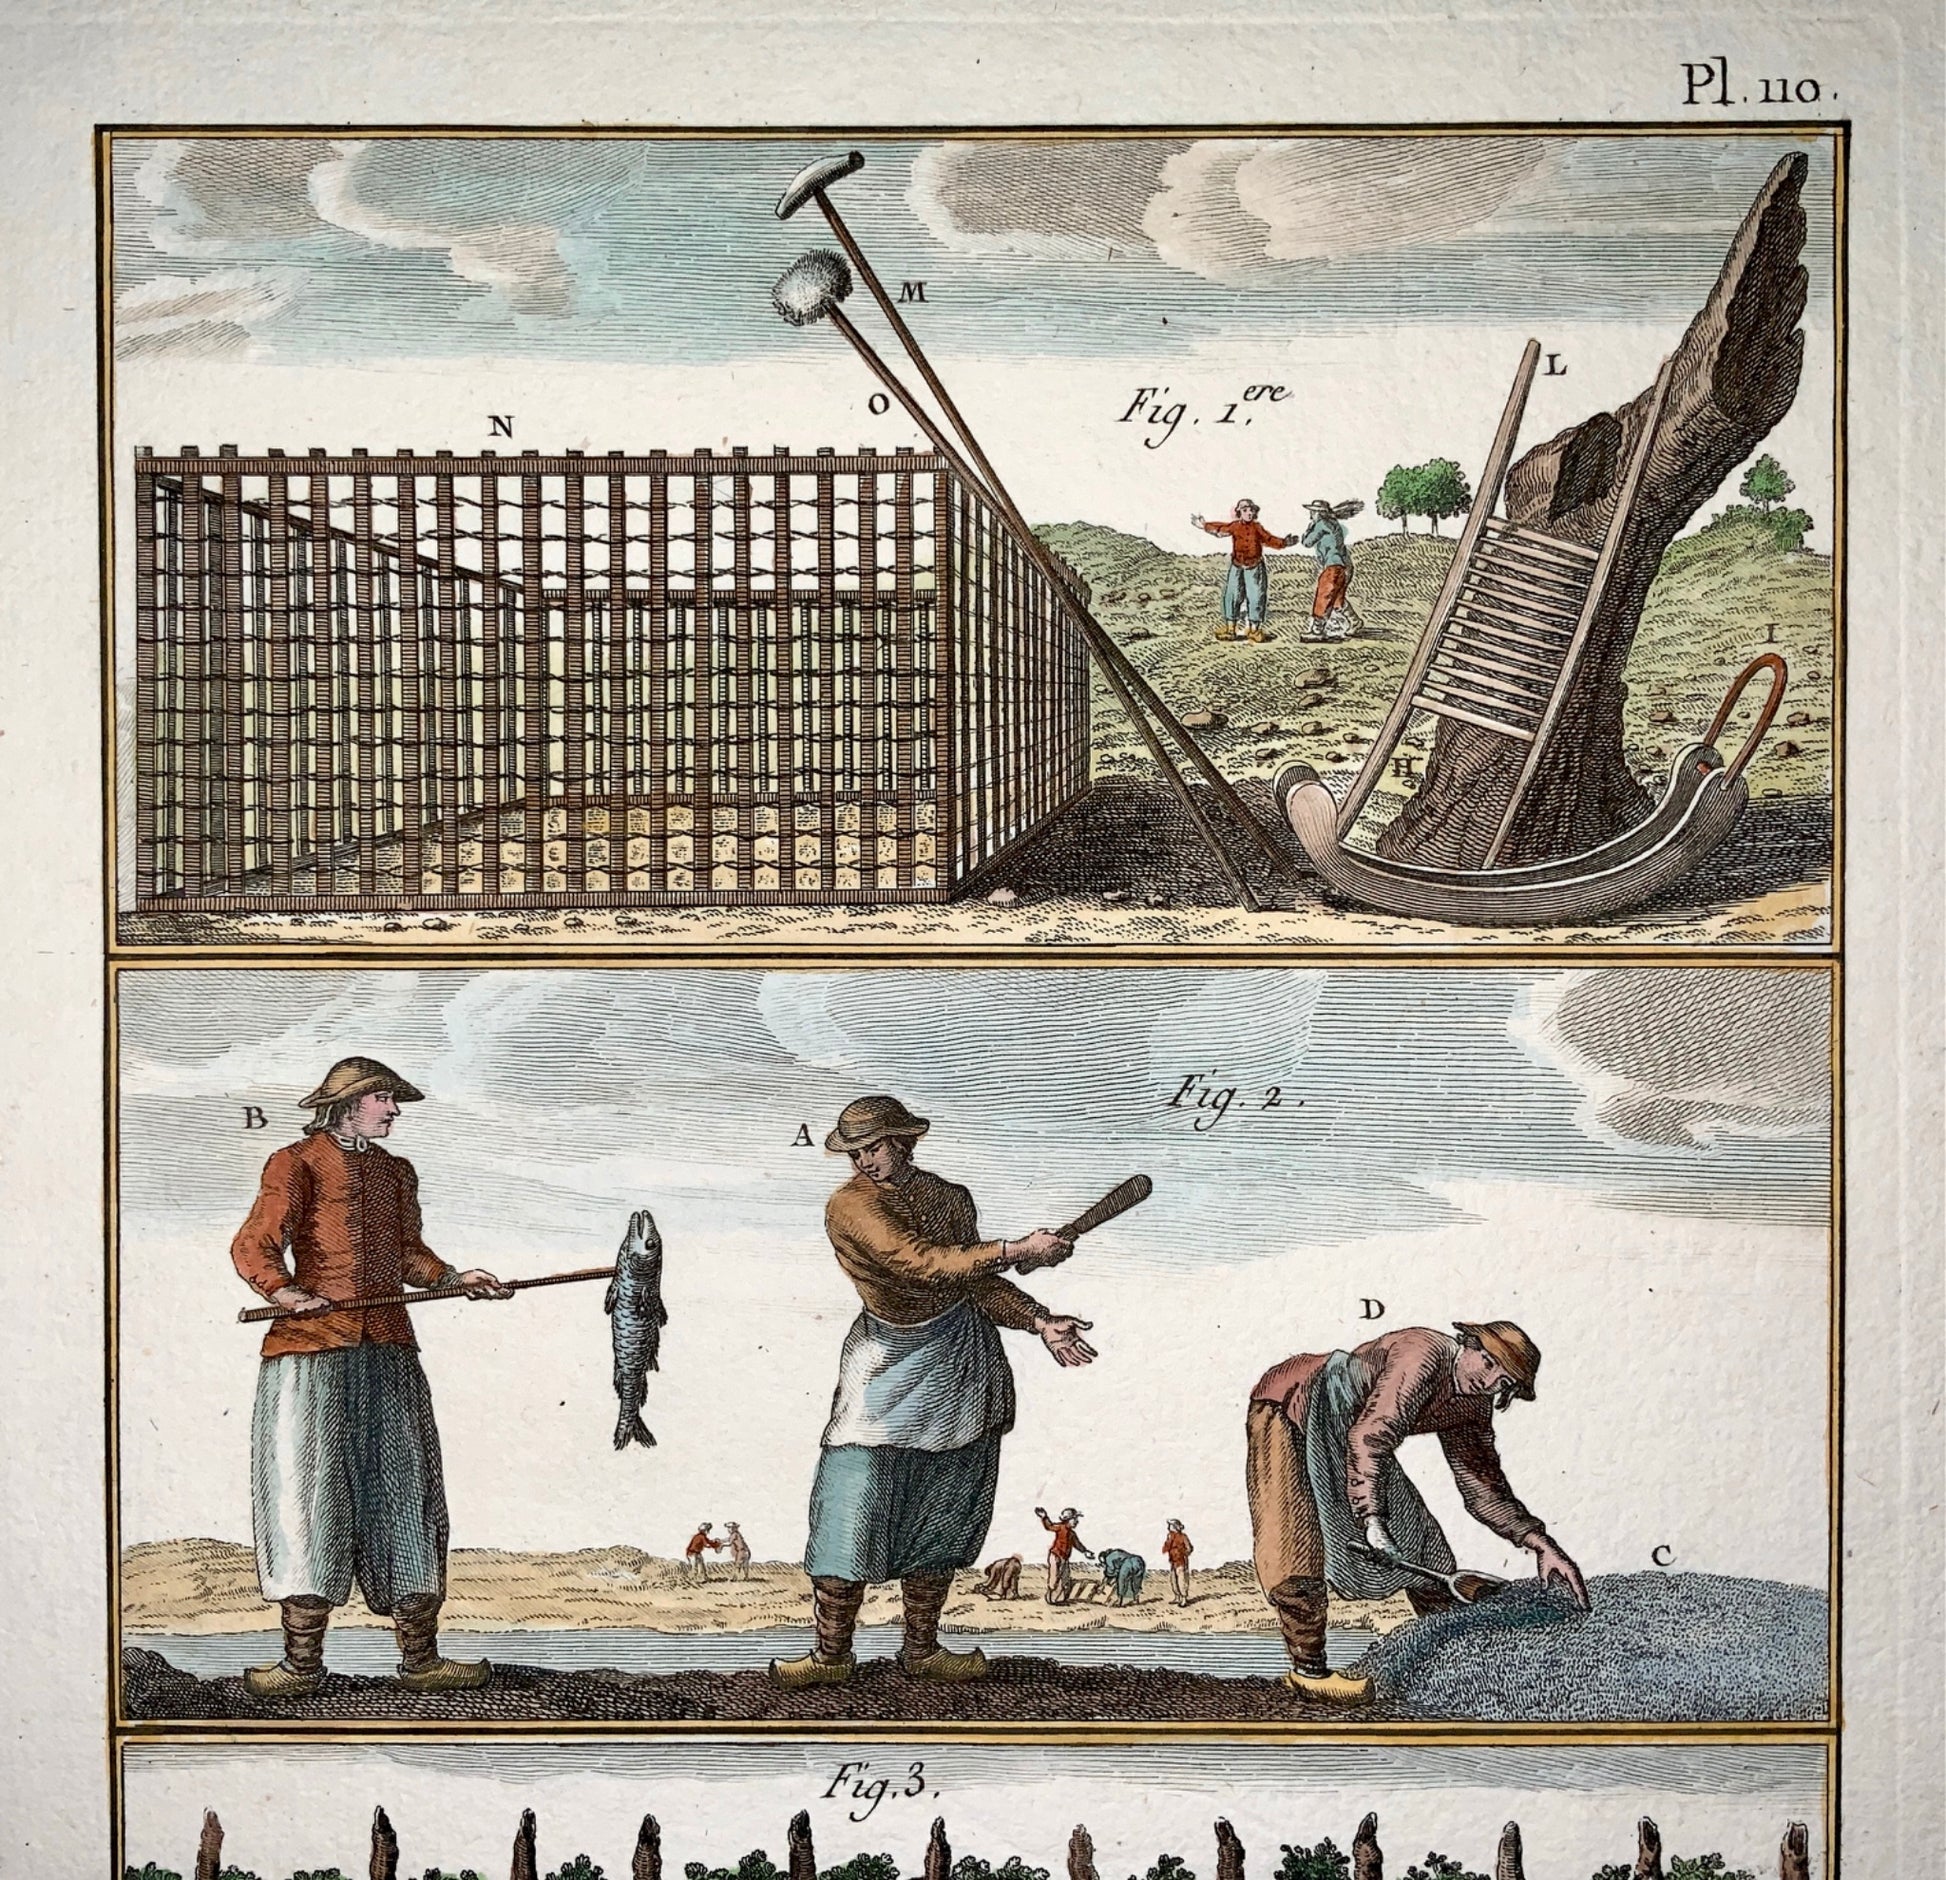 1793 Panckoucke - TRADE Profession Fish Processing - Fine FOLIO antique original